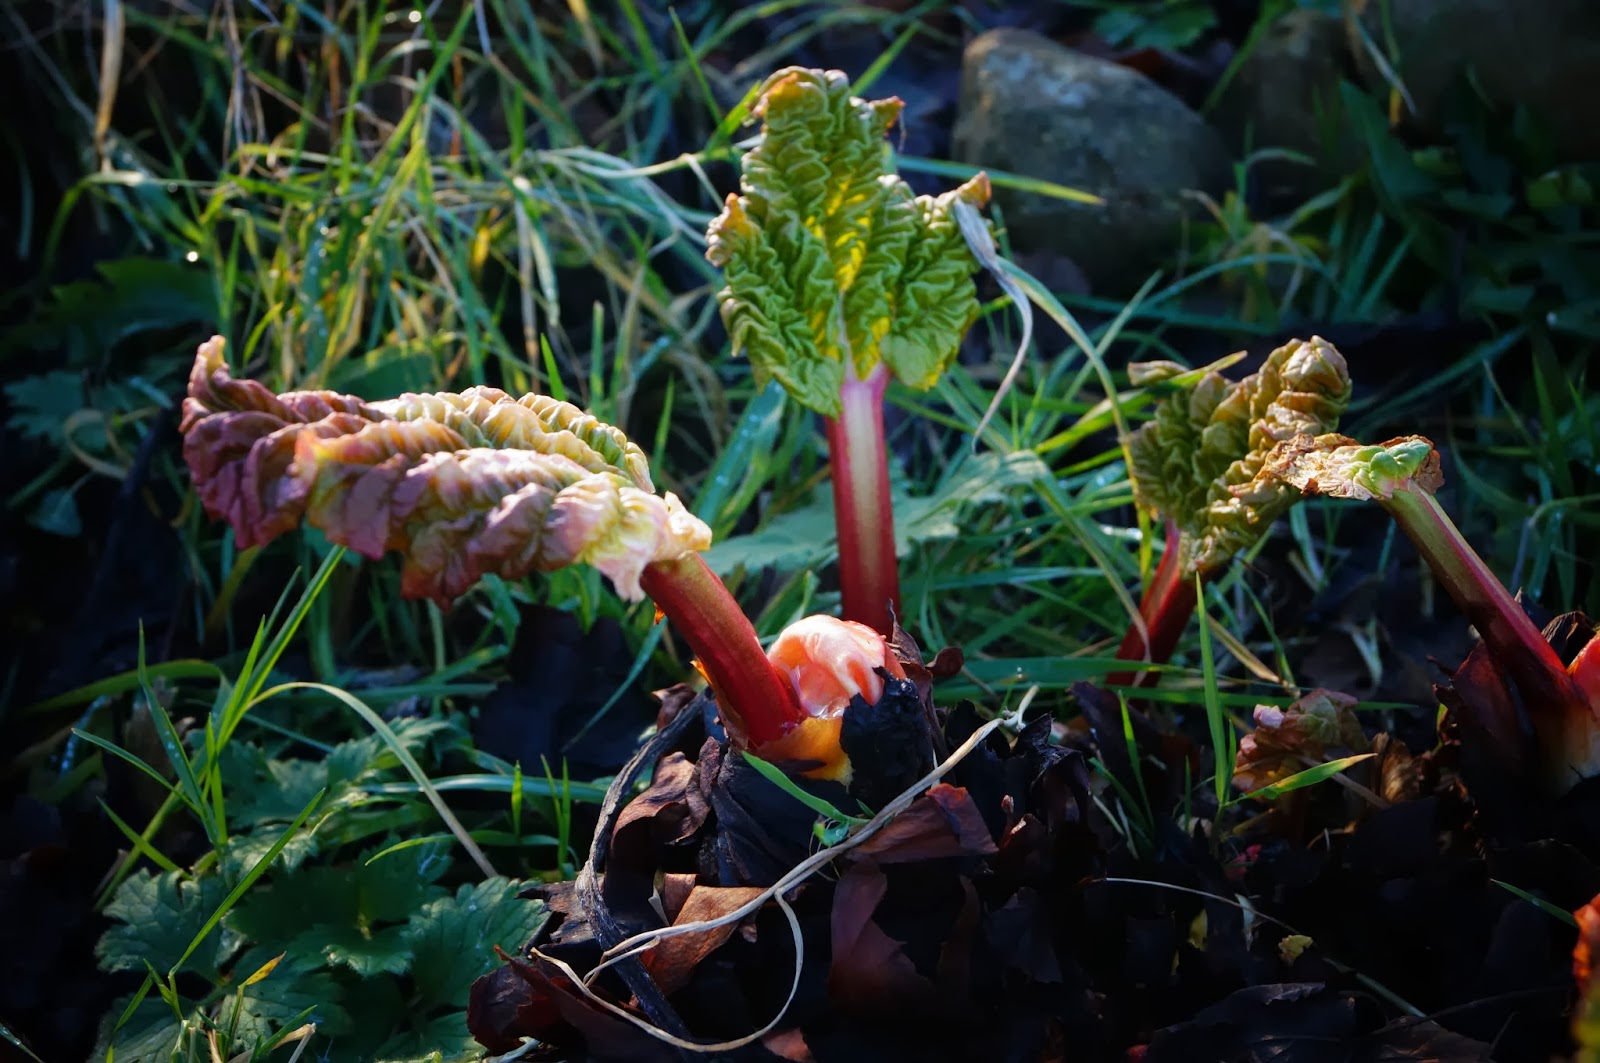 Rhubarb poking through - 'Grow Our Own' Allotment Blog